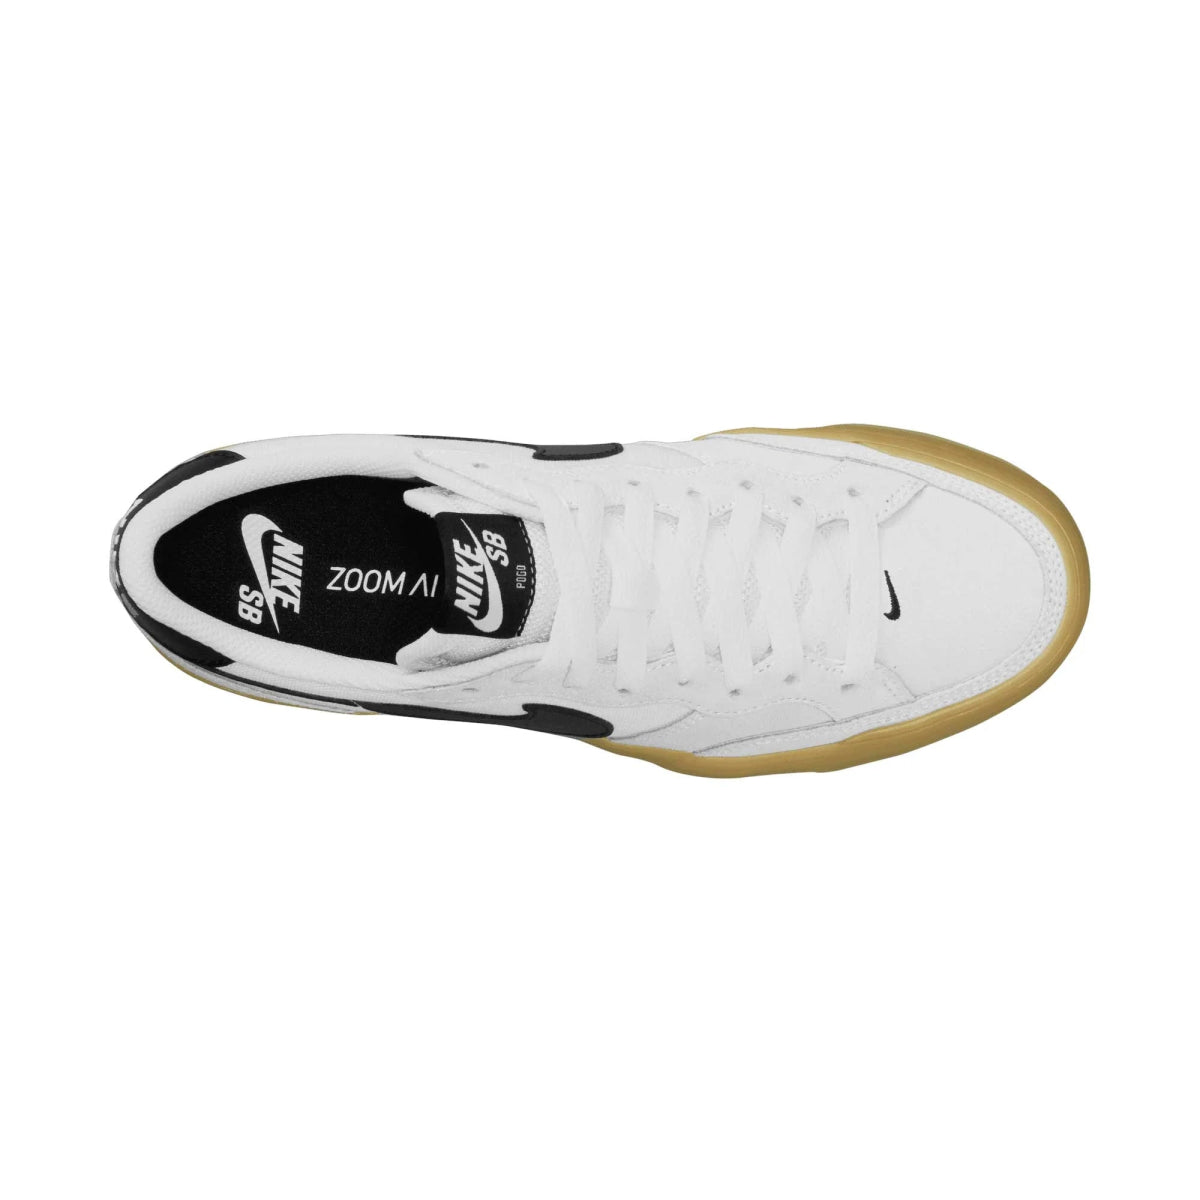 Nike SB Pogo in White/Black/Gum - Goodnews Skateshop